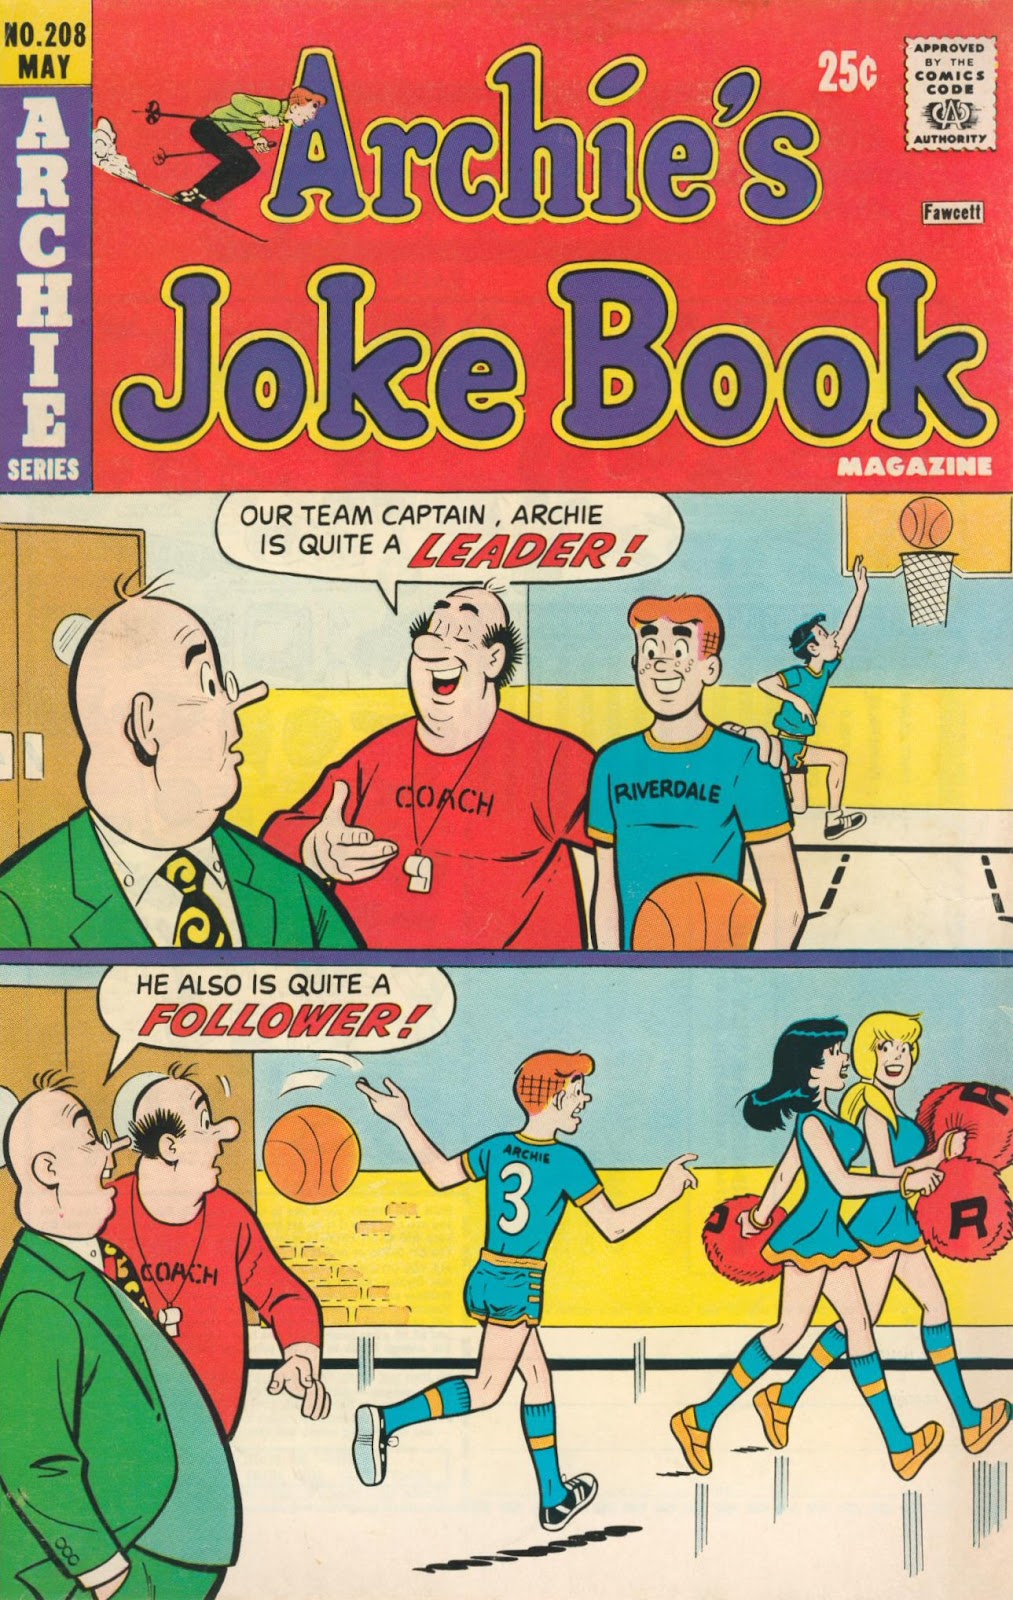 Archie's Joke Book Magazine issue 208 - Page 1